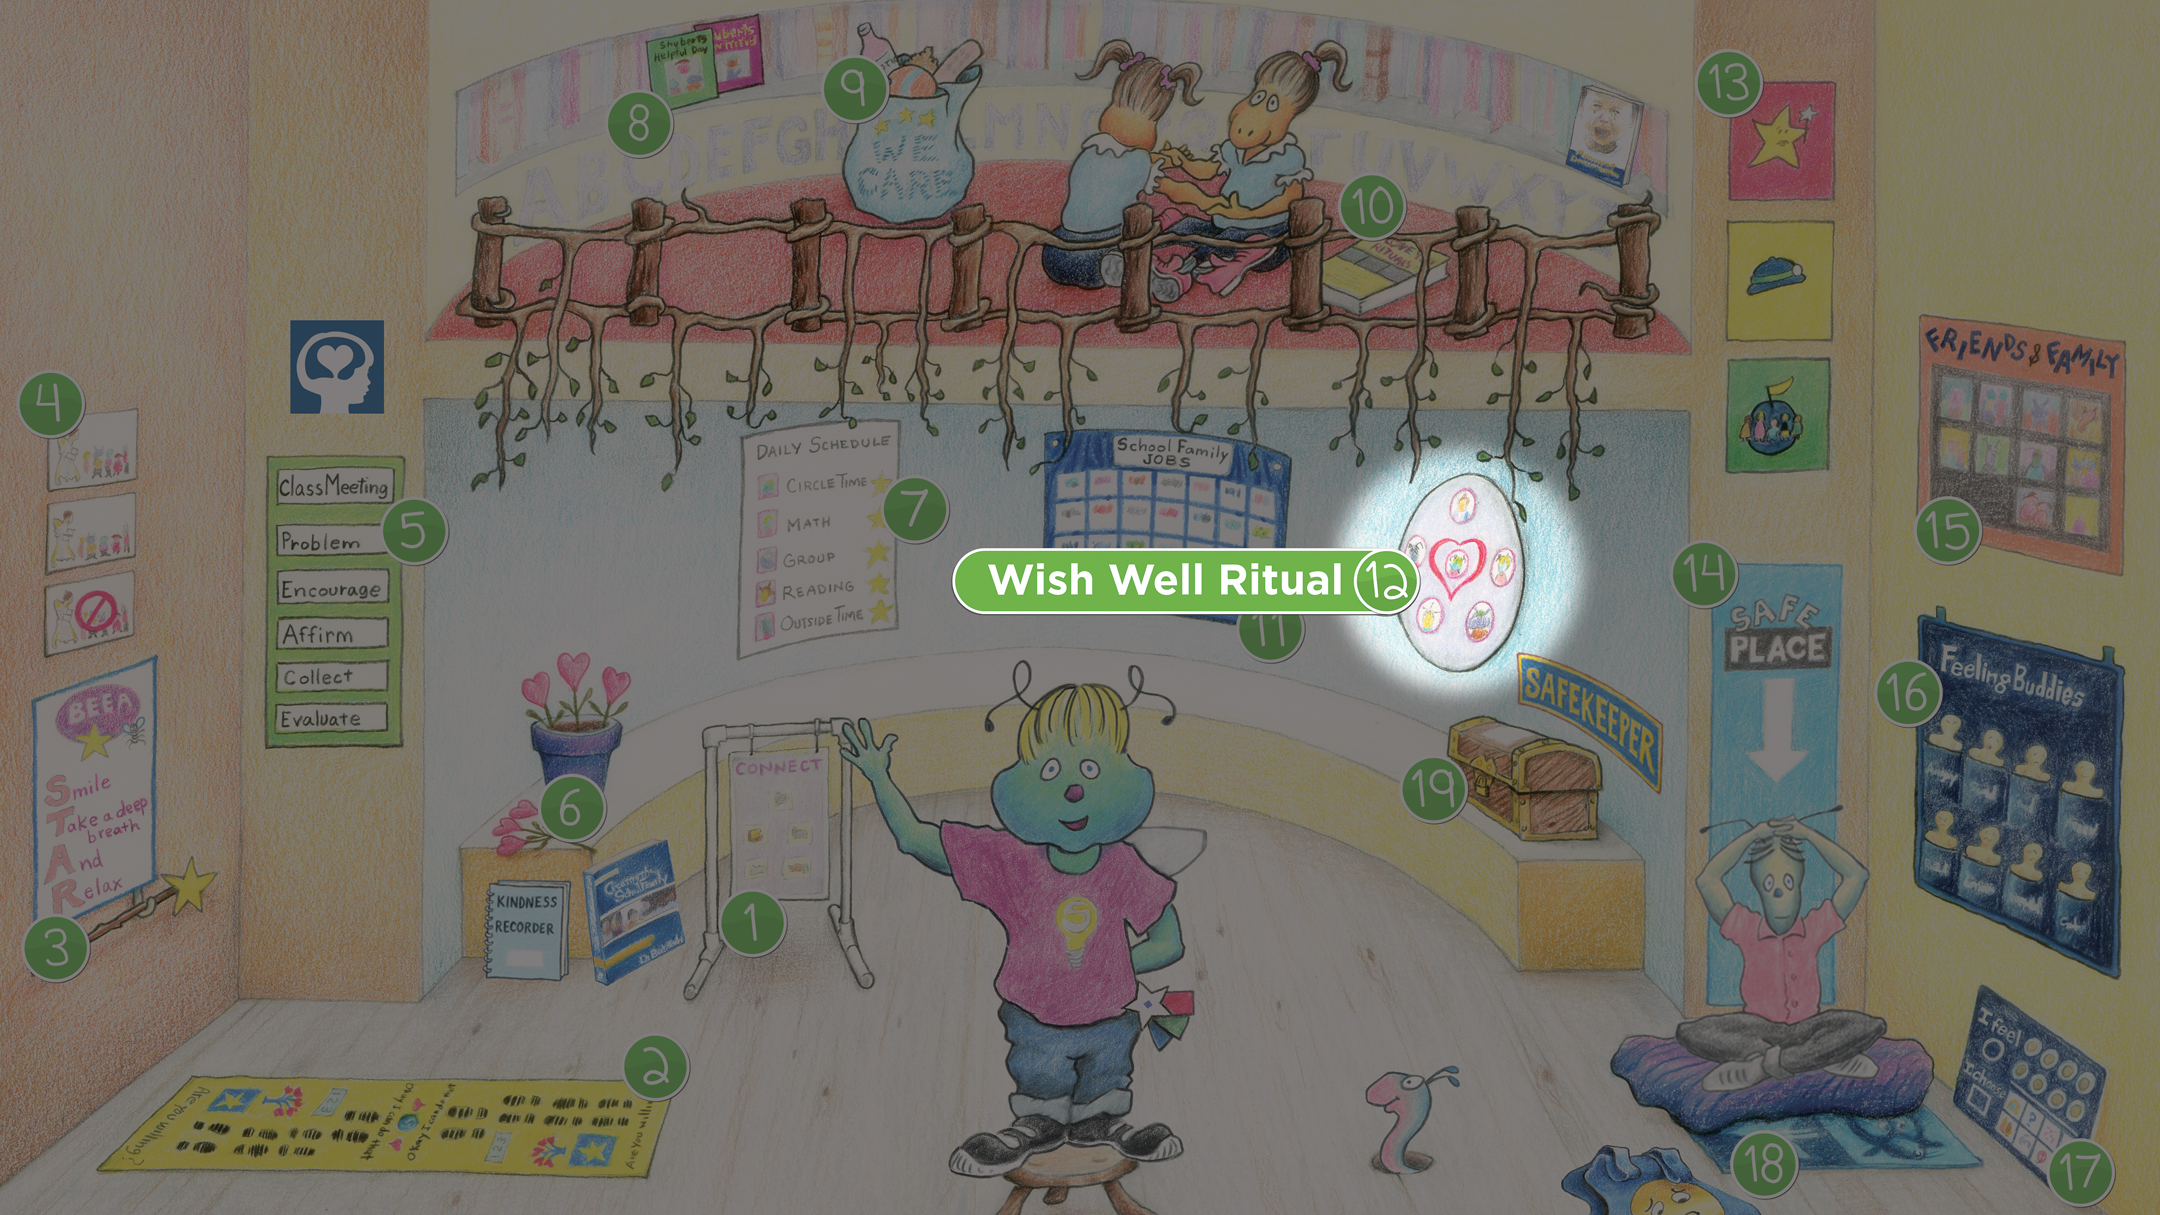 Shubert's Classroom: Wish Well Ritual